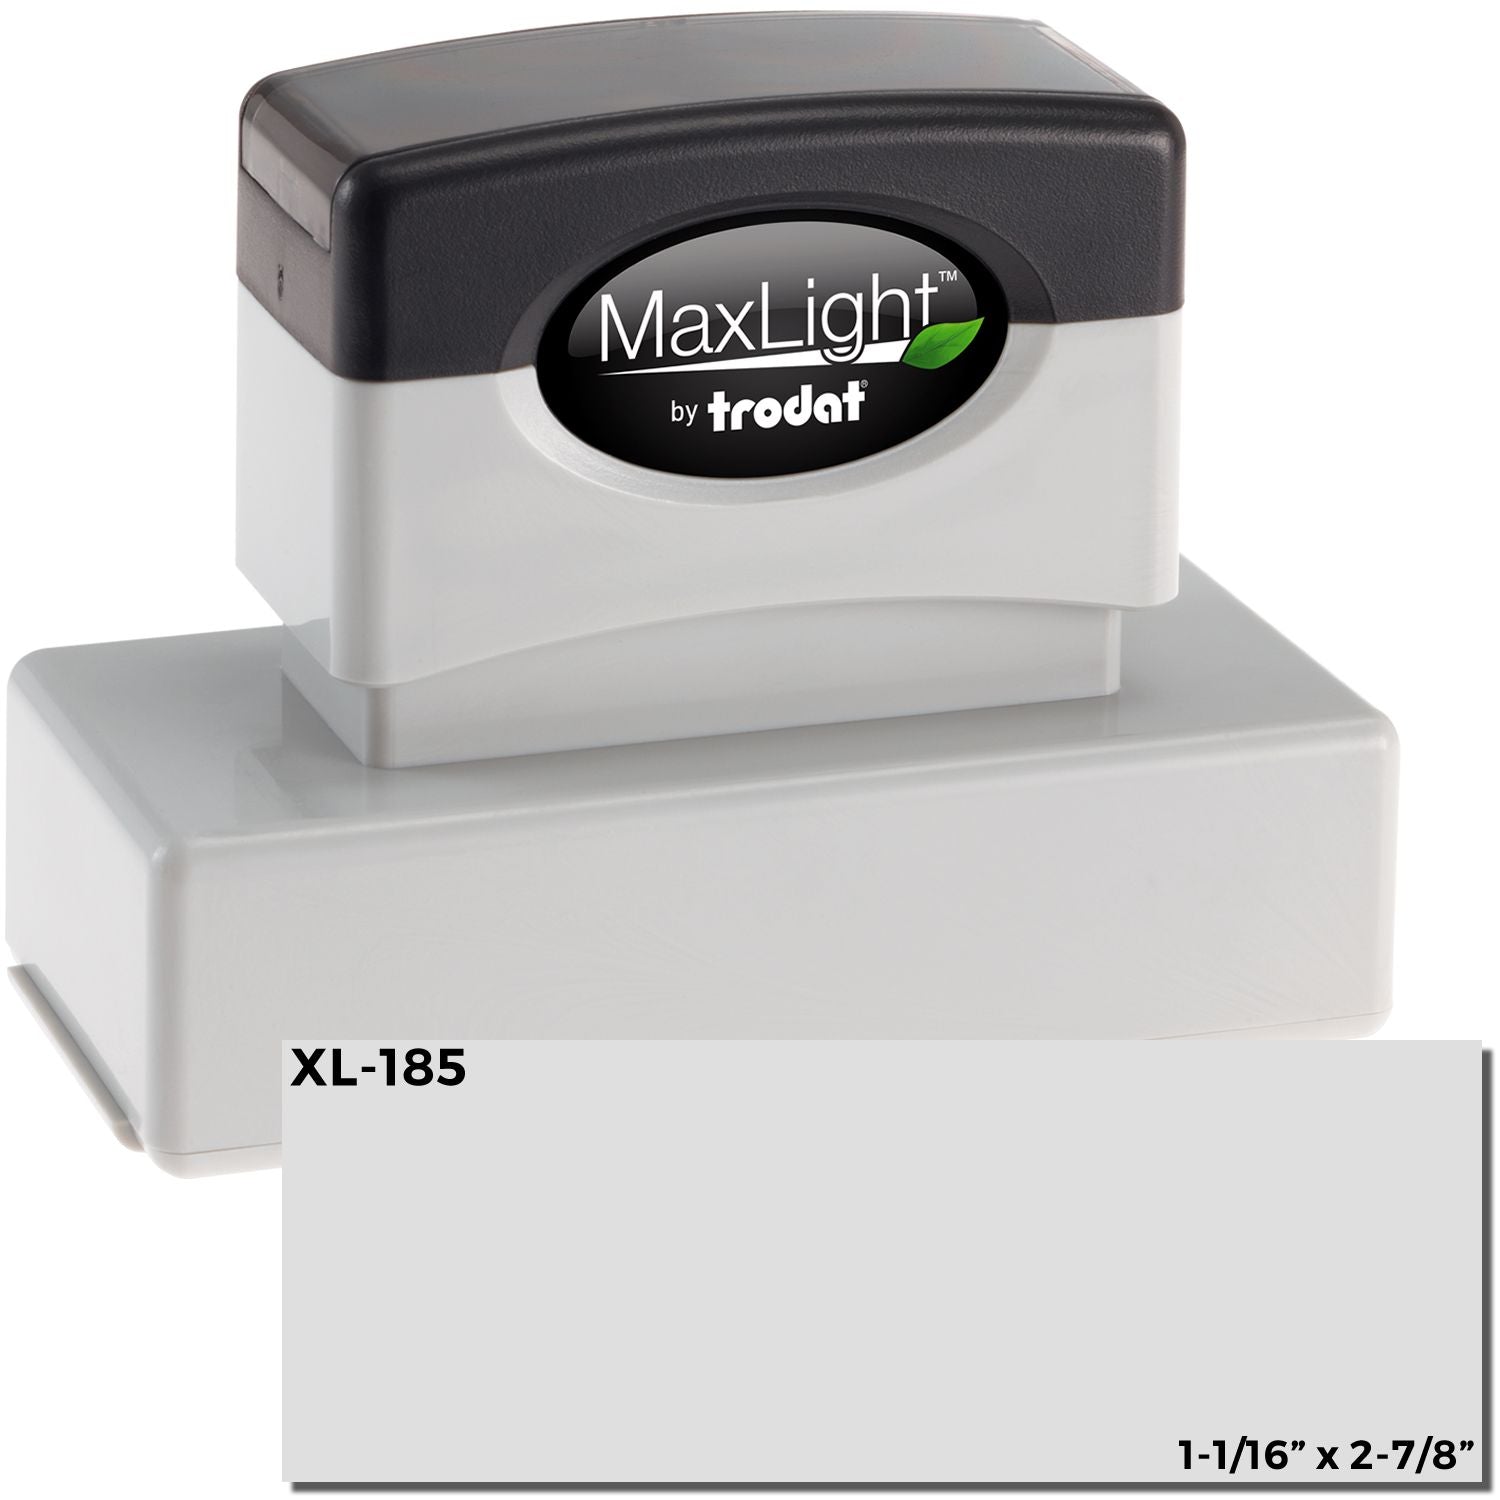 Maxlight Xl2 185 Pre Inked Stamp 15 16 X 2 3 4 Main Image